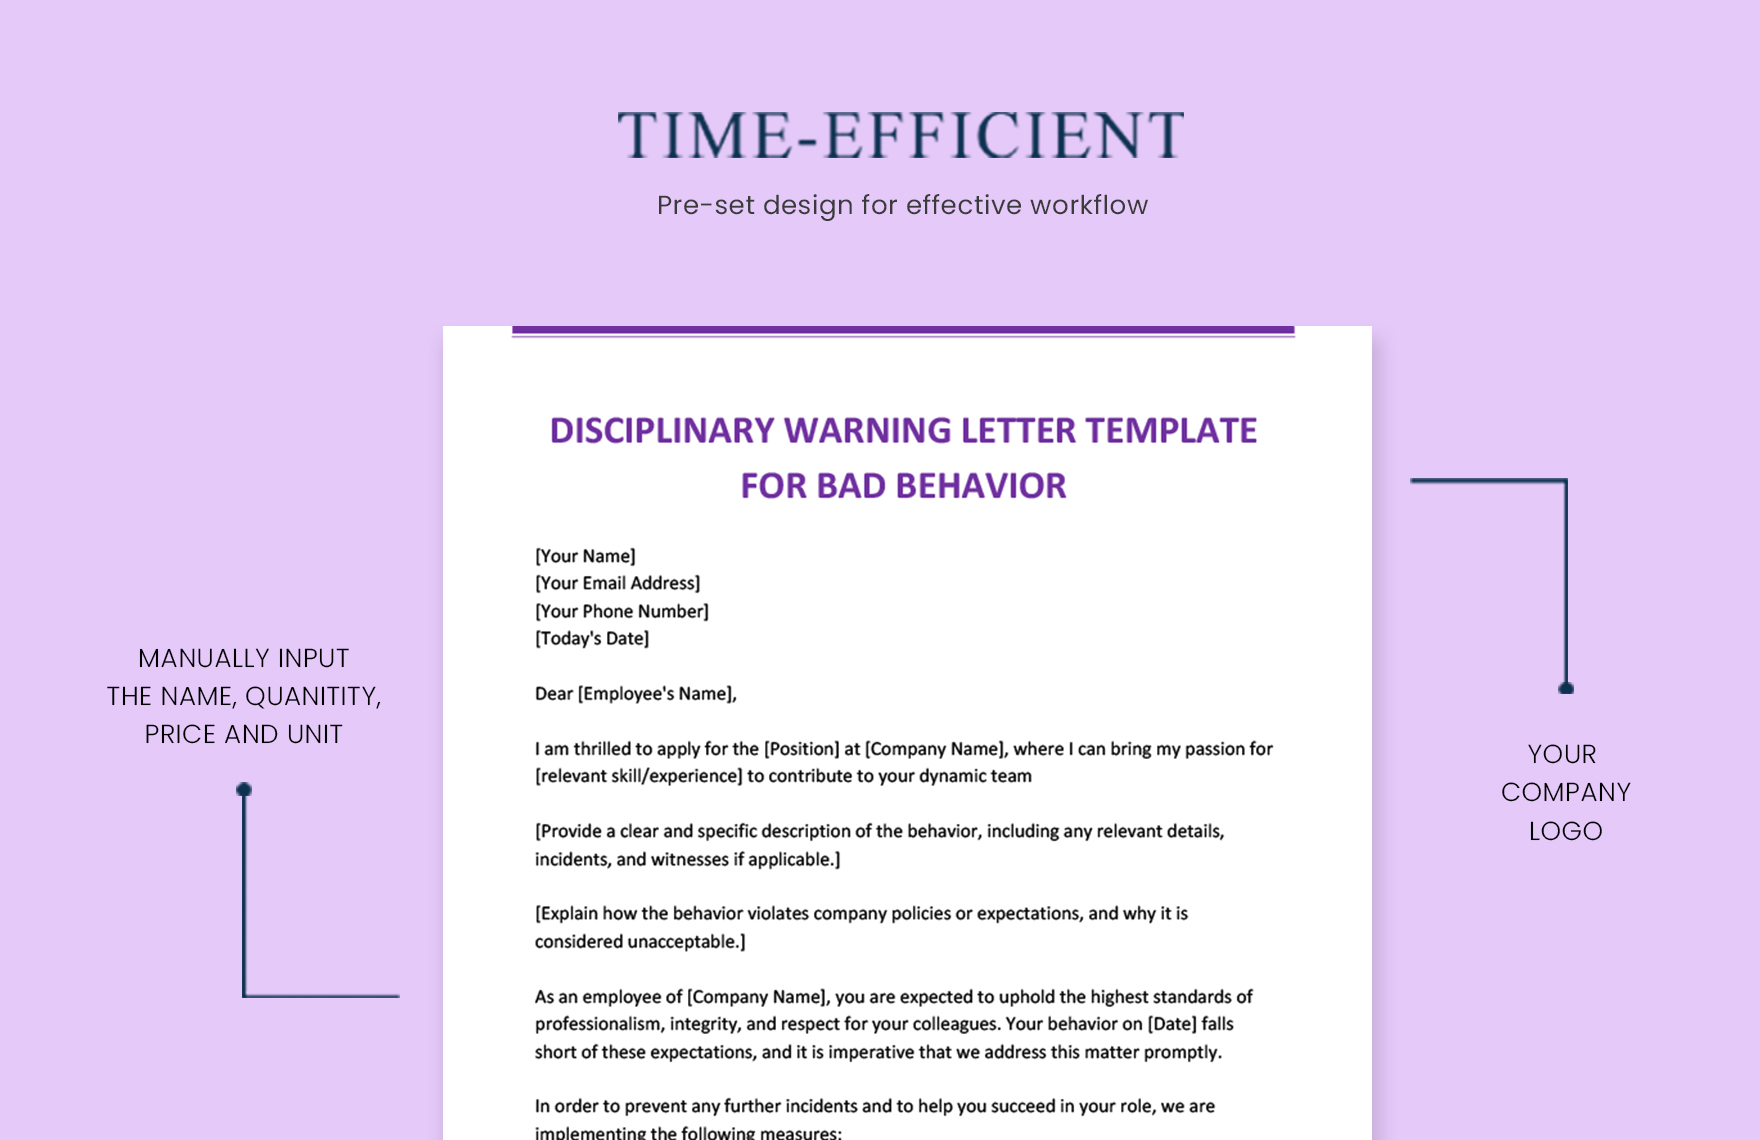 Disciplinary Warning Letter Template for Bad Behavior